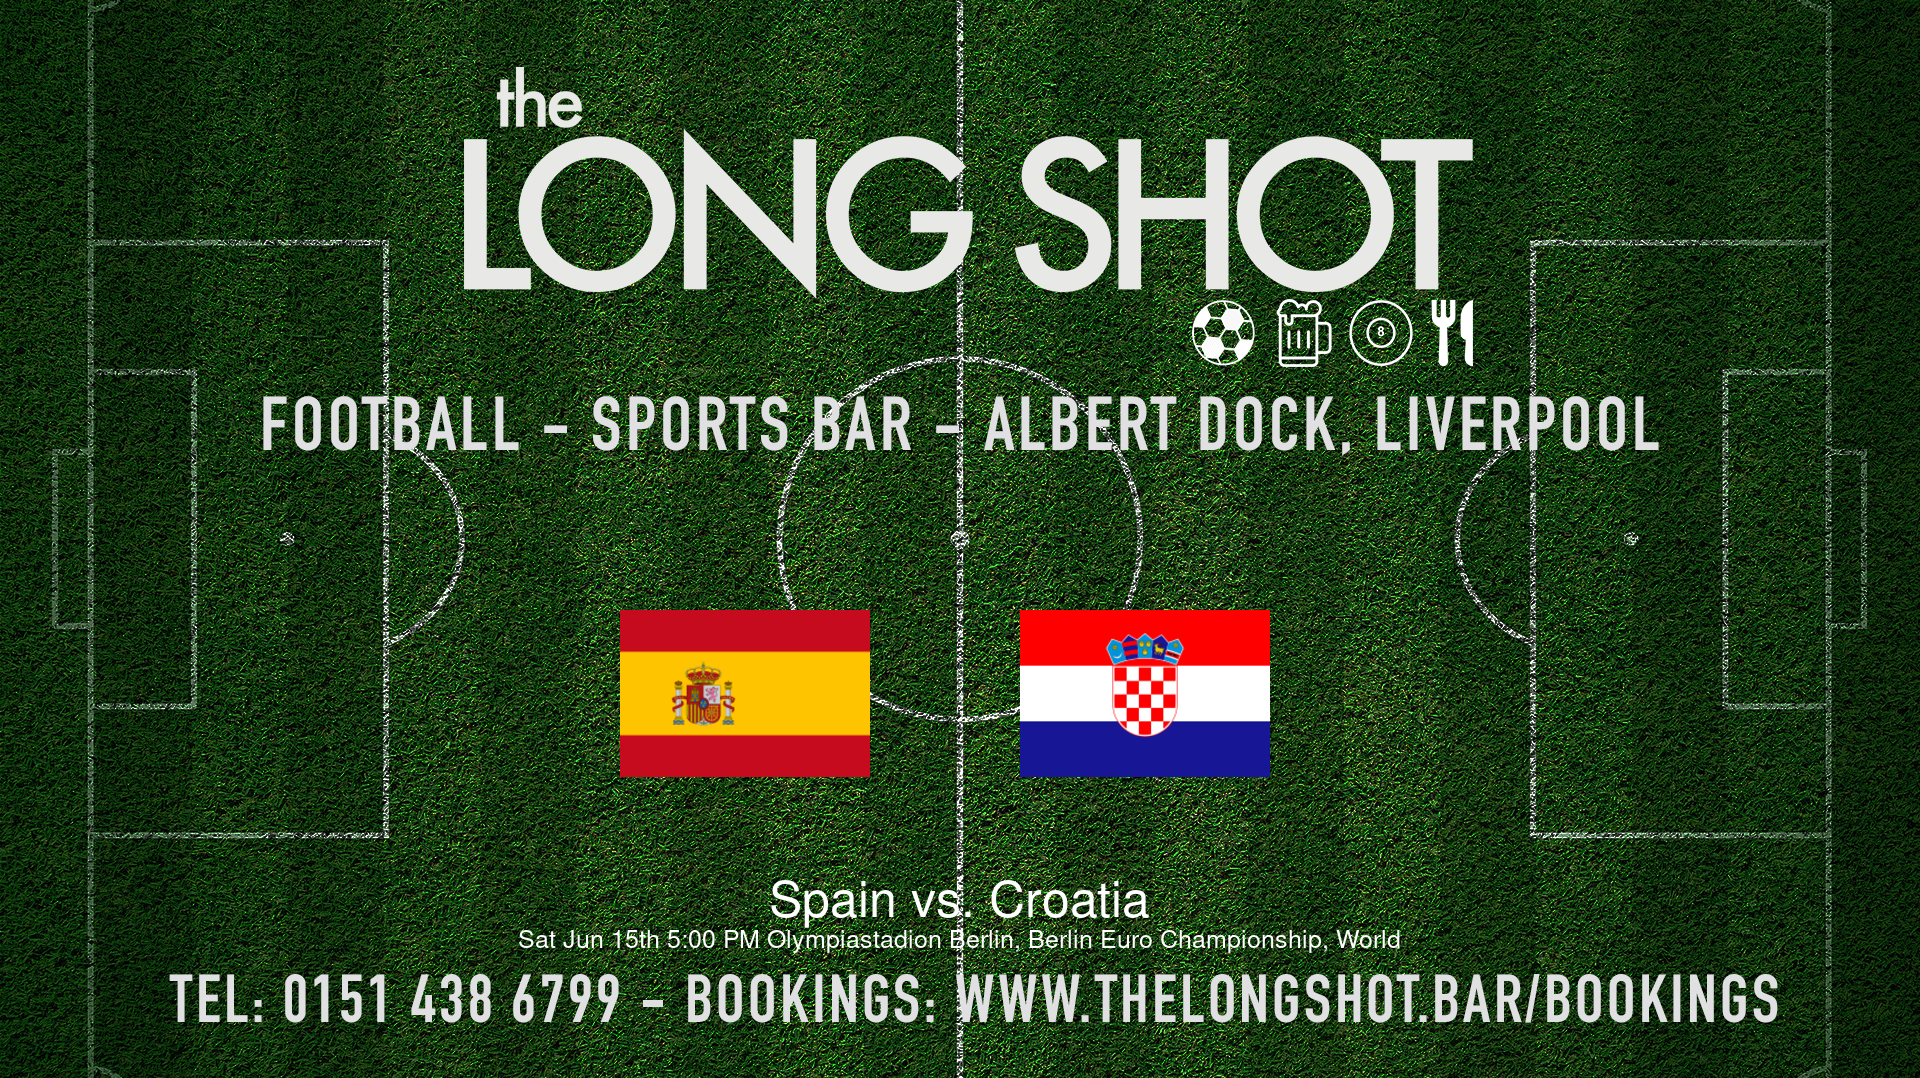 Event image - Spain vs. Croatia